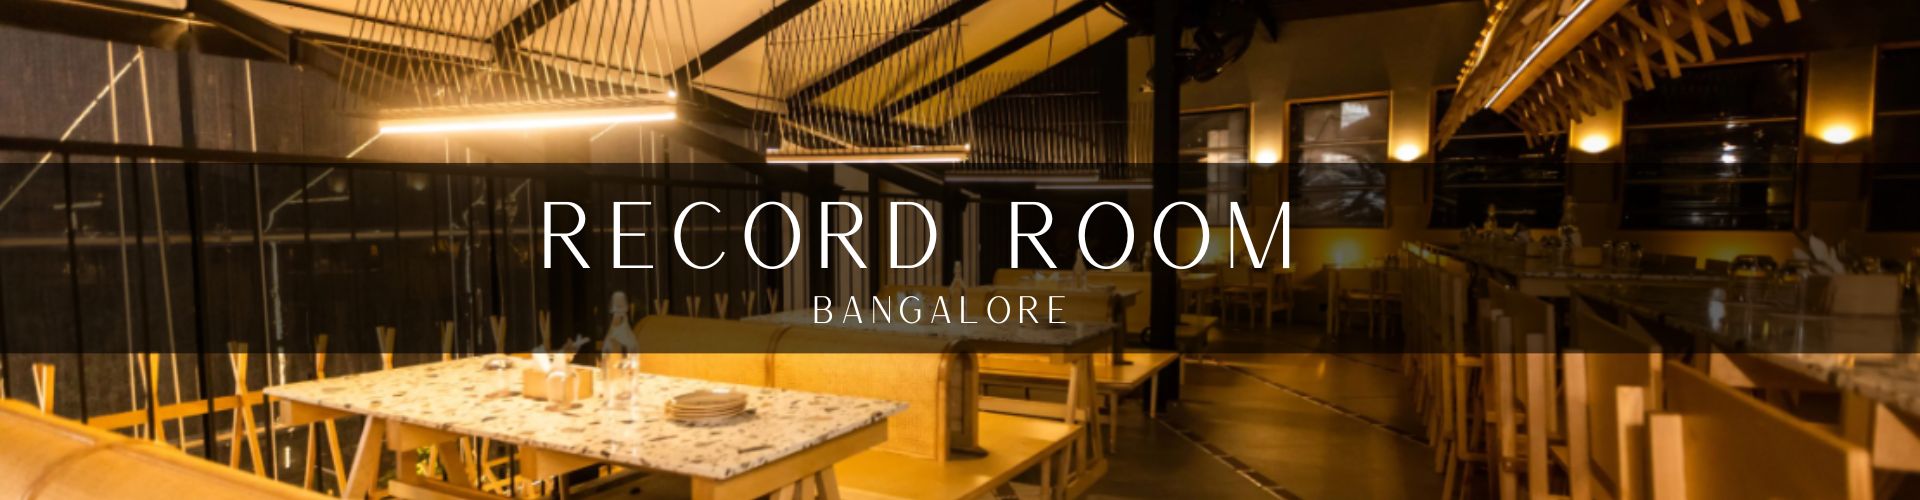 Record Room Project Palasa Bangalore